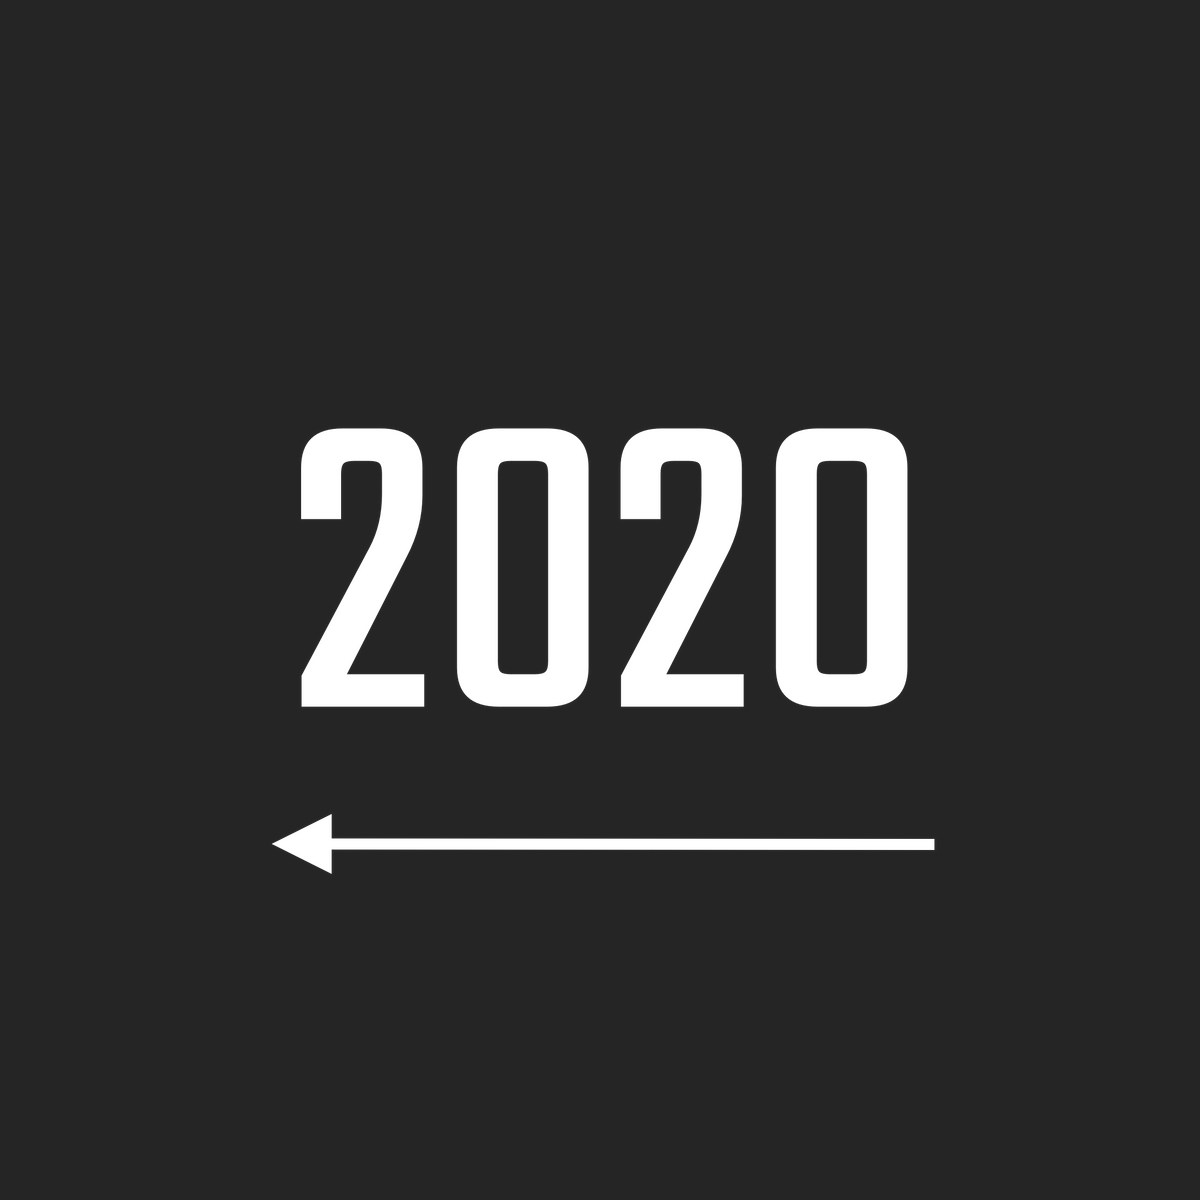 2020, a reflection